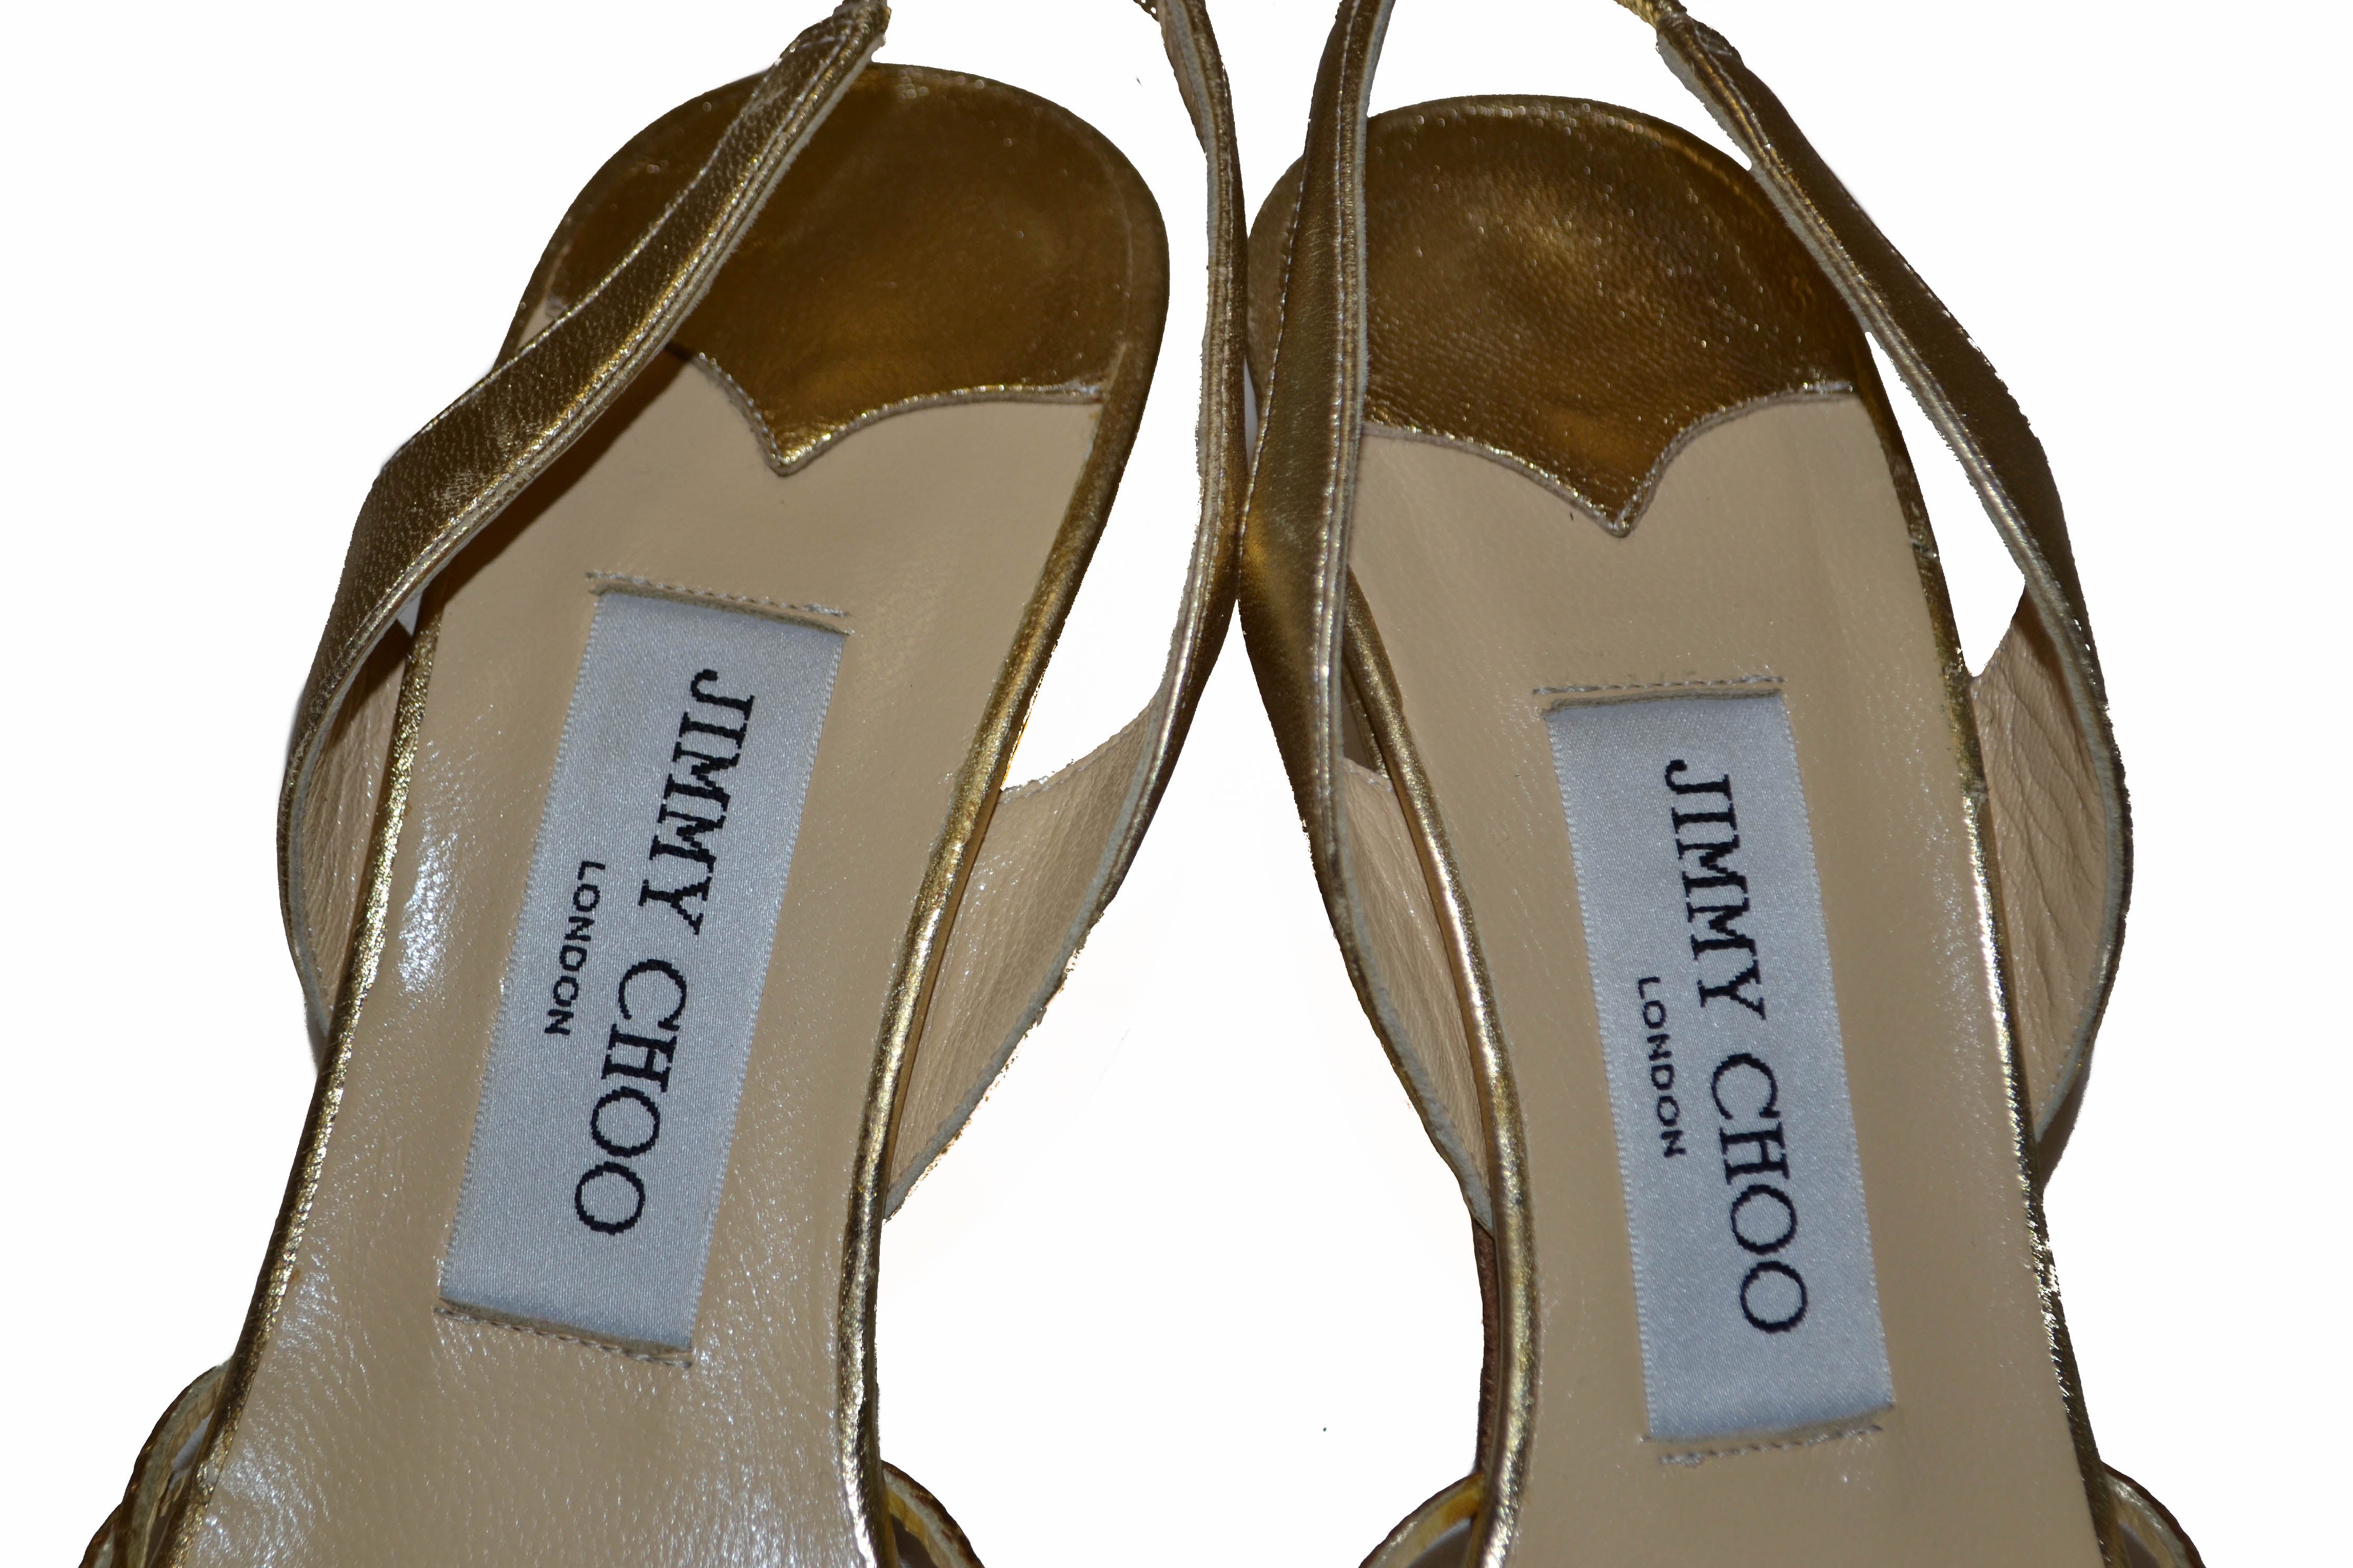 Authentic Jimmy Choo Metallic Gold Sandal Size 36.5